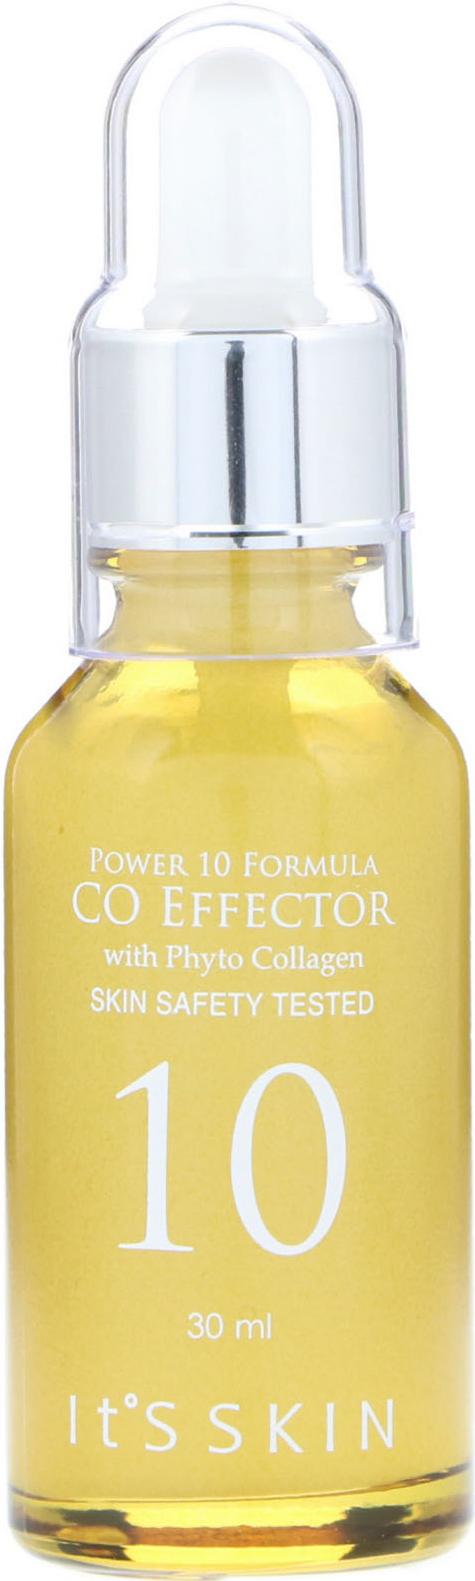 Сыворотка для лица Skin Power 10 Formula Effector, 30мл It's Skin